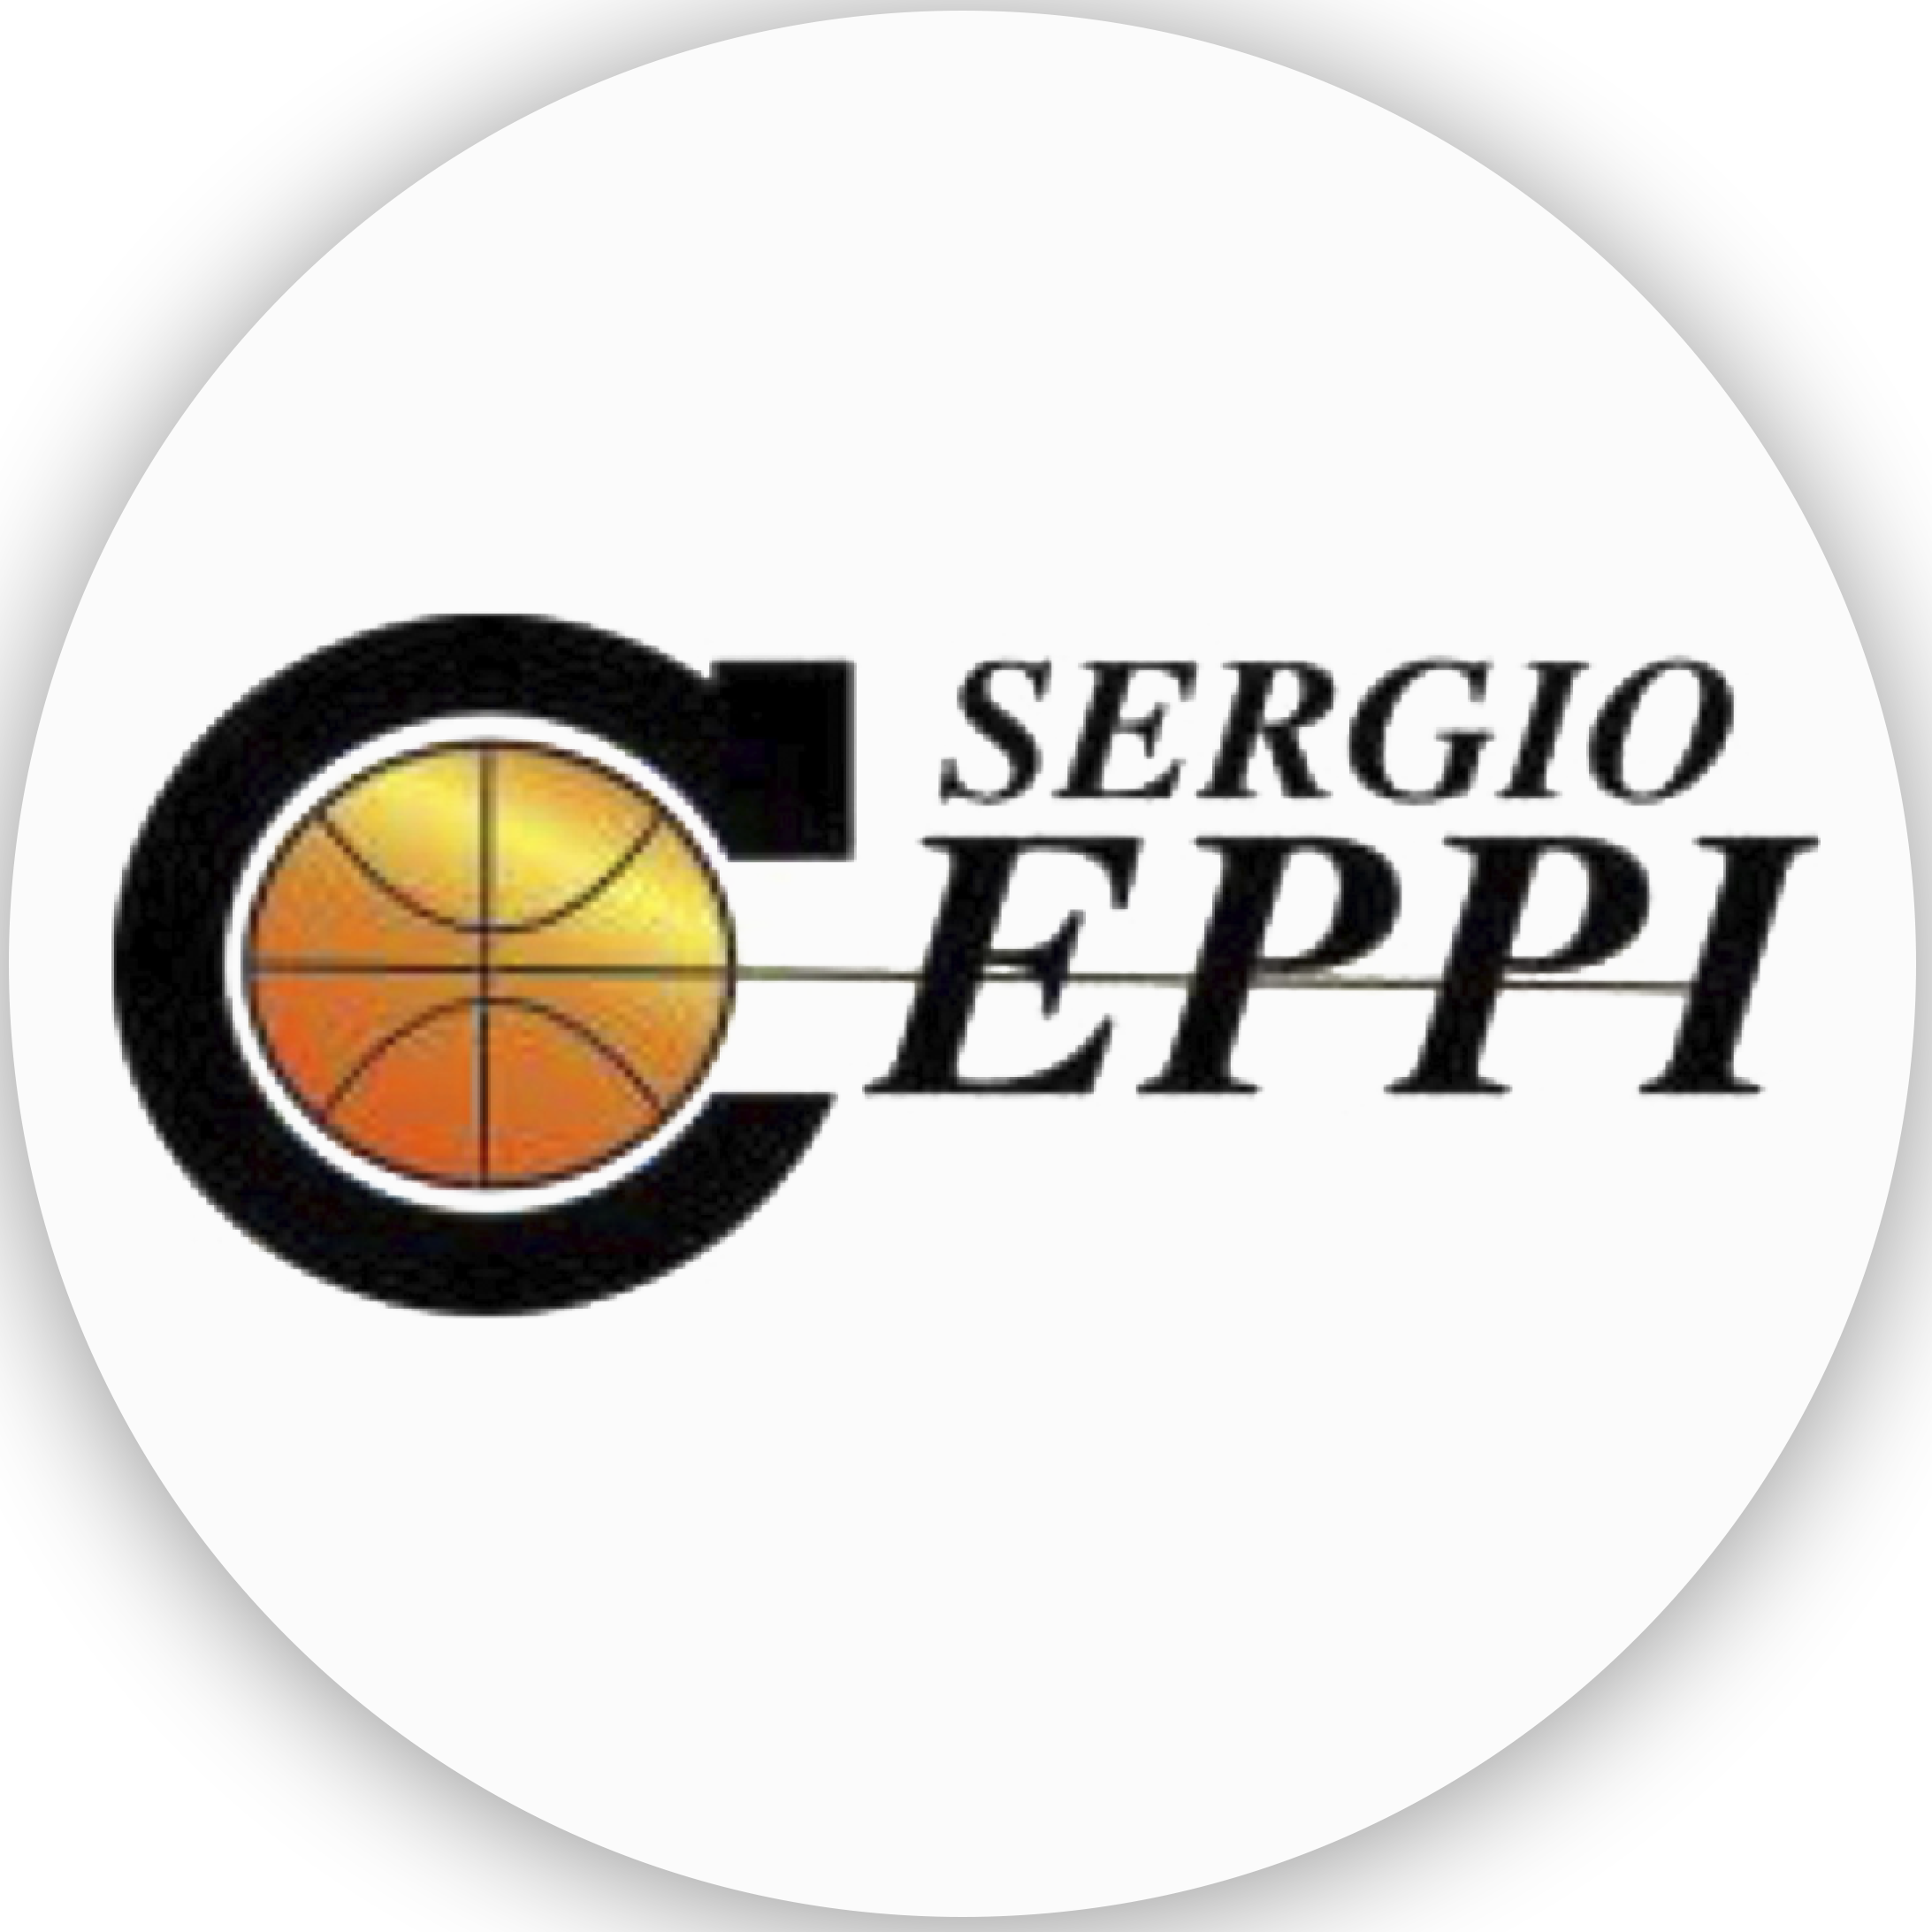 Sergio Ceppi